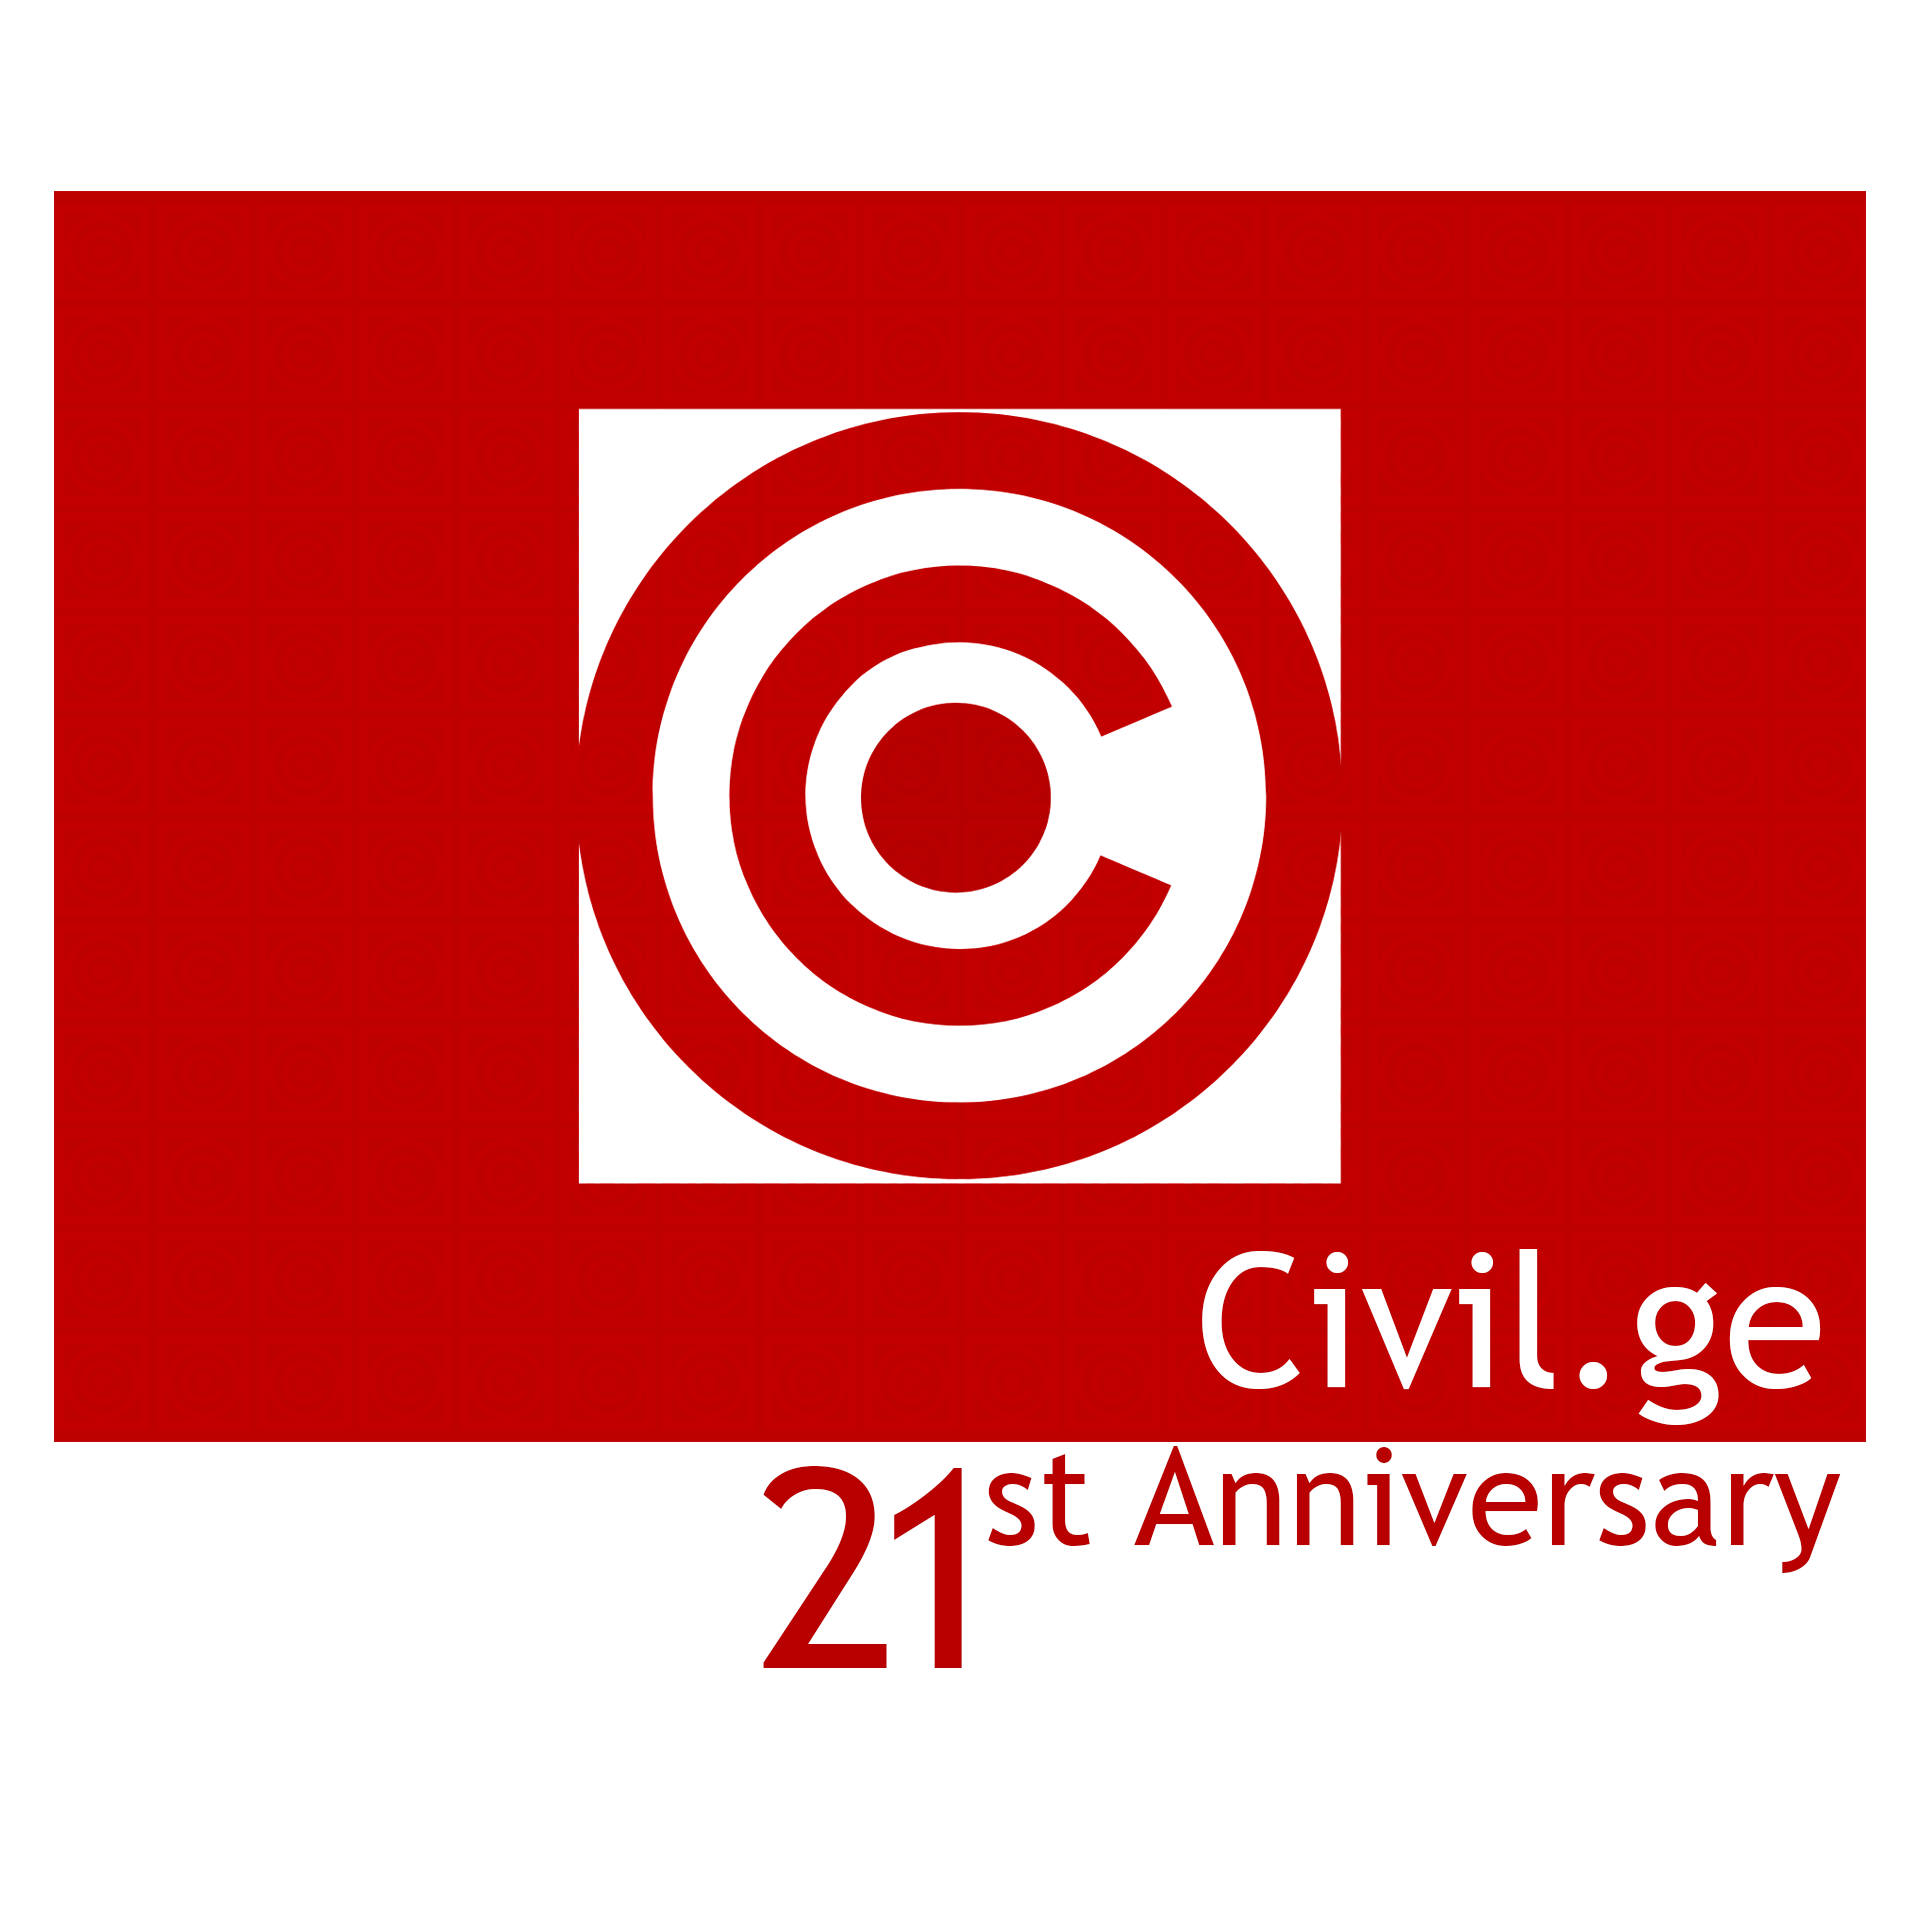 Civil.ge celebrates its 21st anniversary